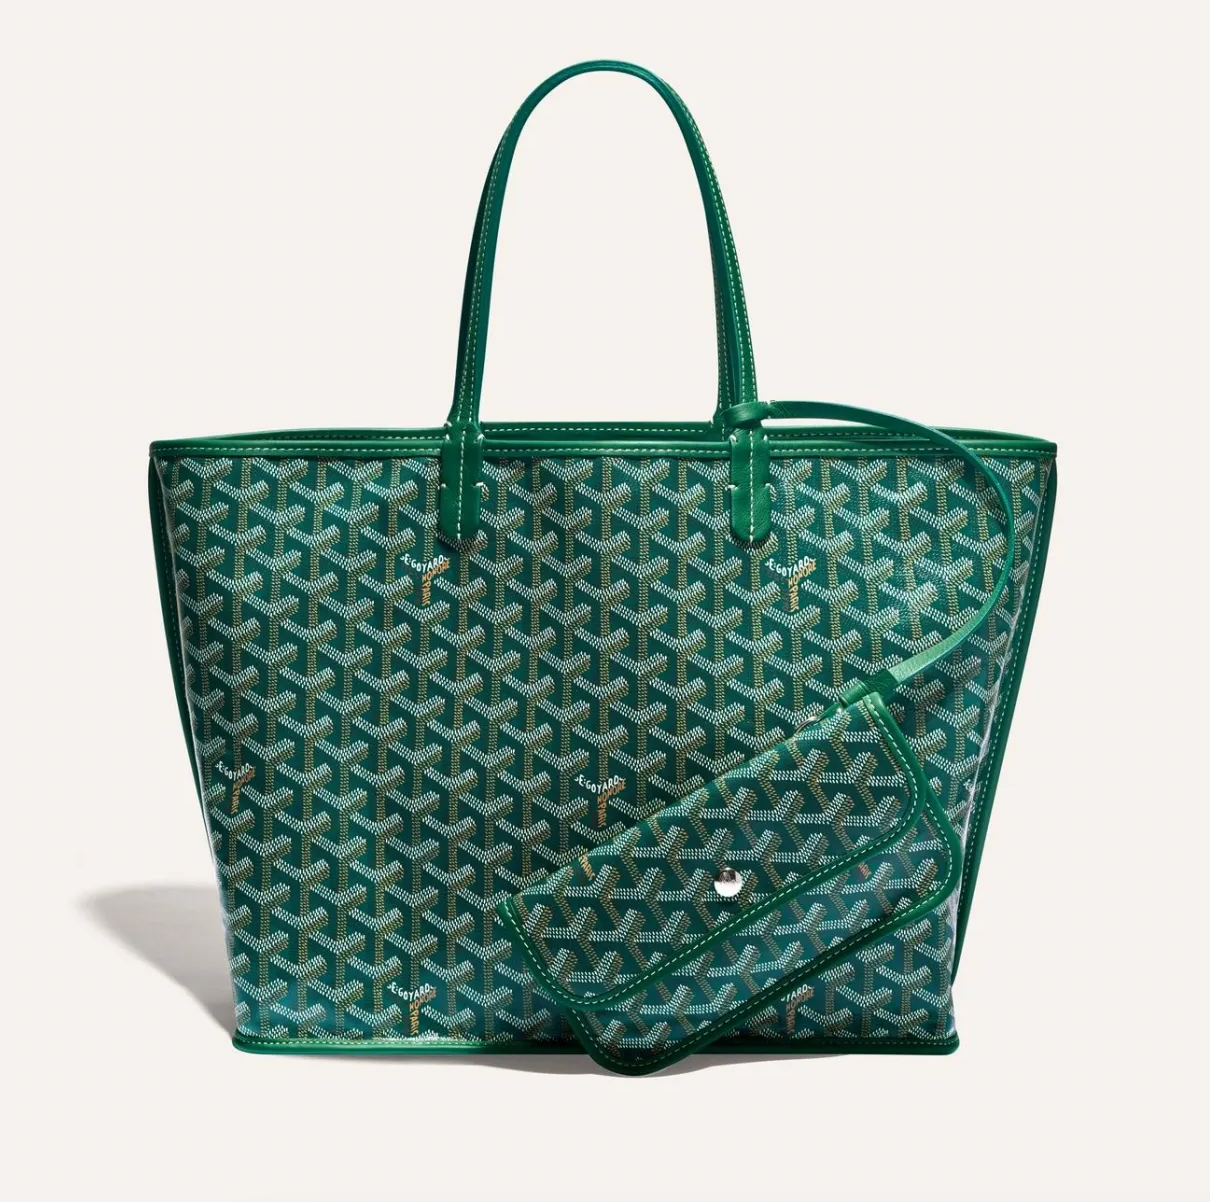 Shop GOYARD ANJOU Handbags by LifeinParis